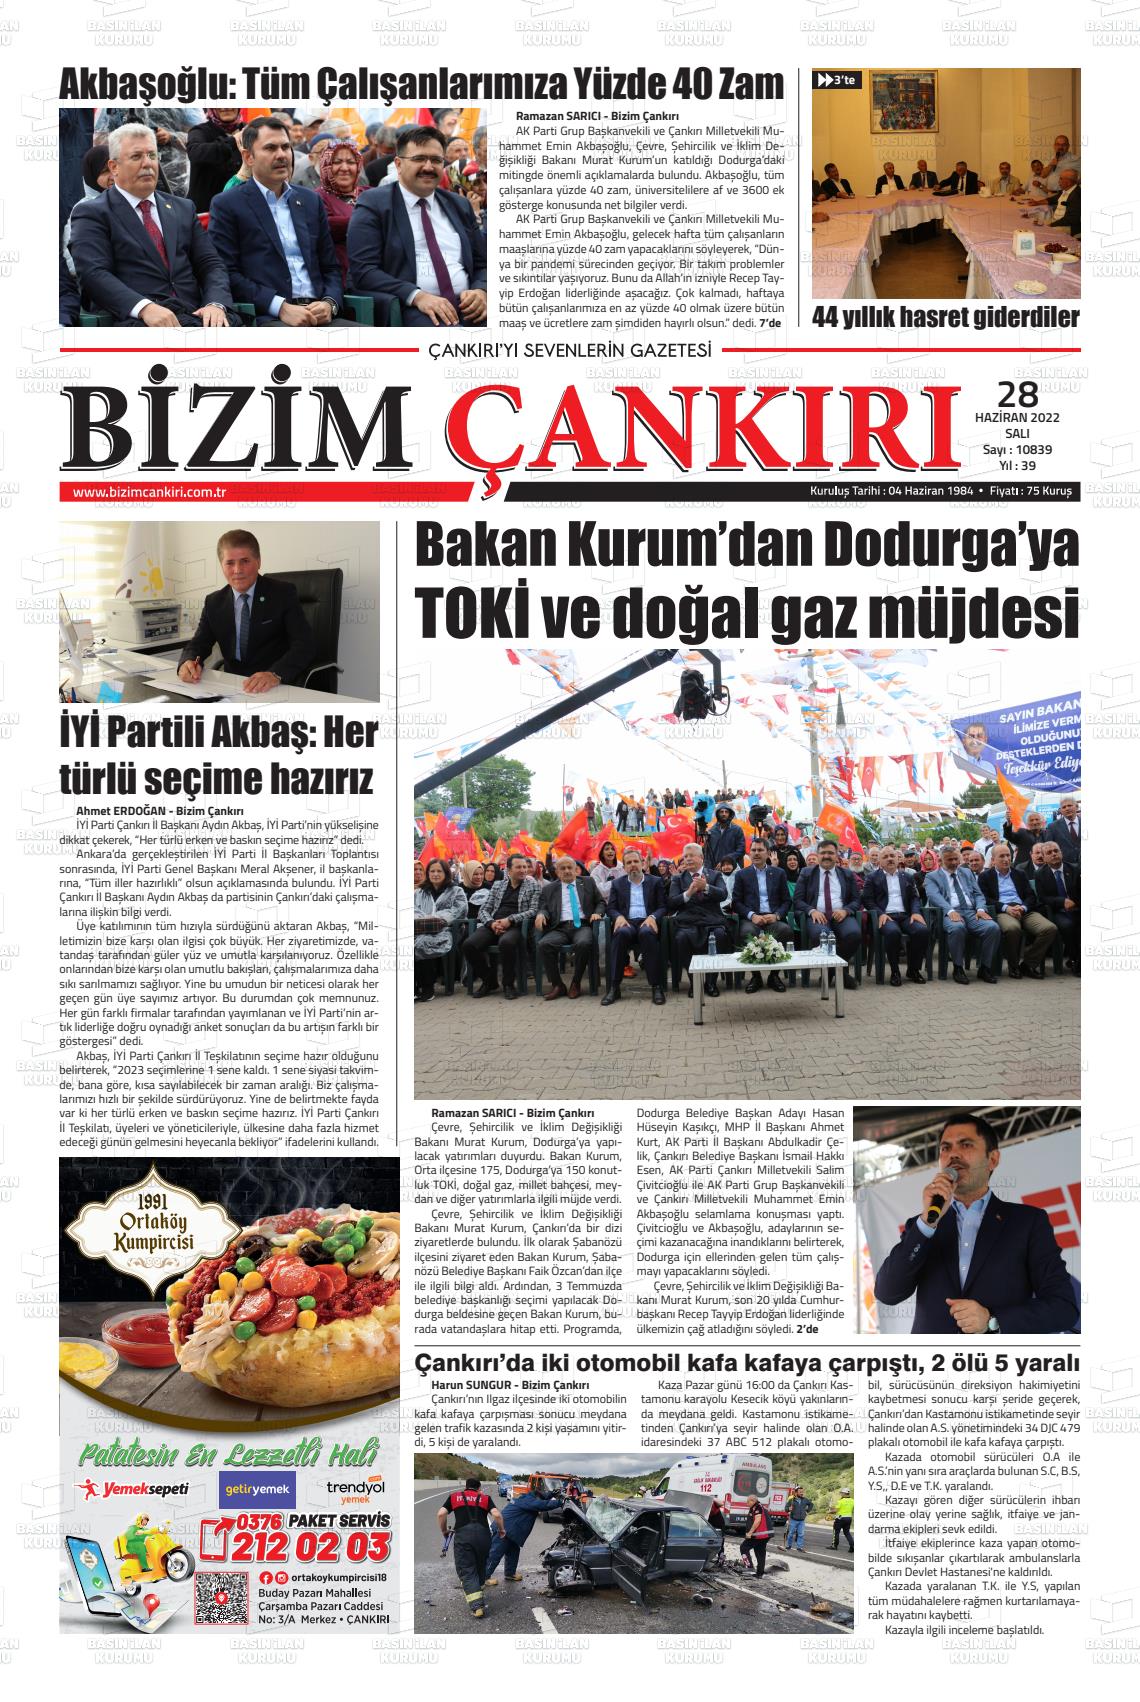 28 Haziran 2022 Bizim Çankırı Gazete Manşeti